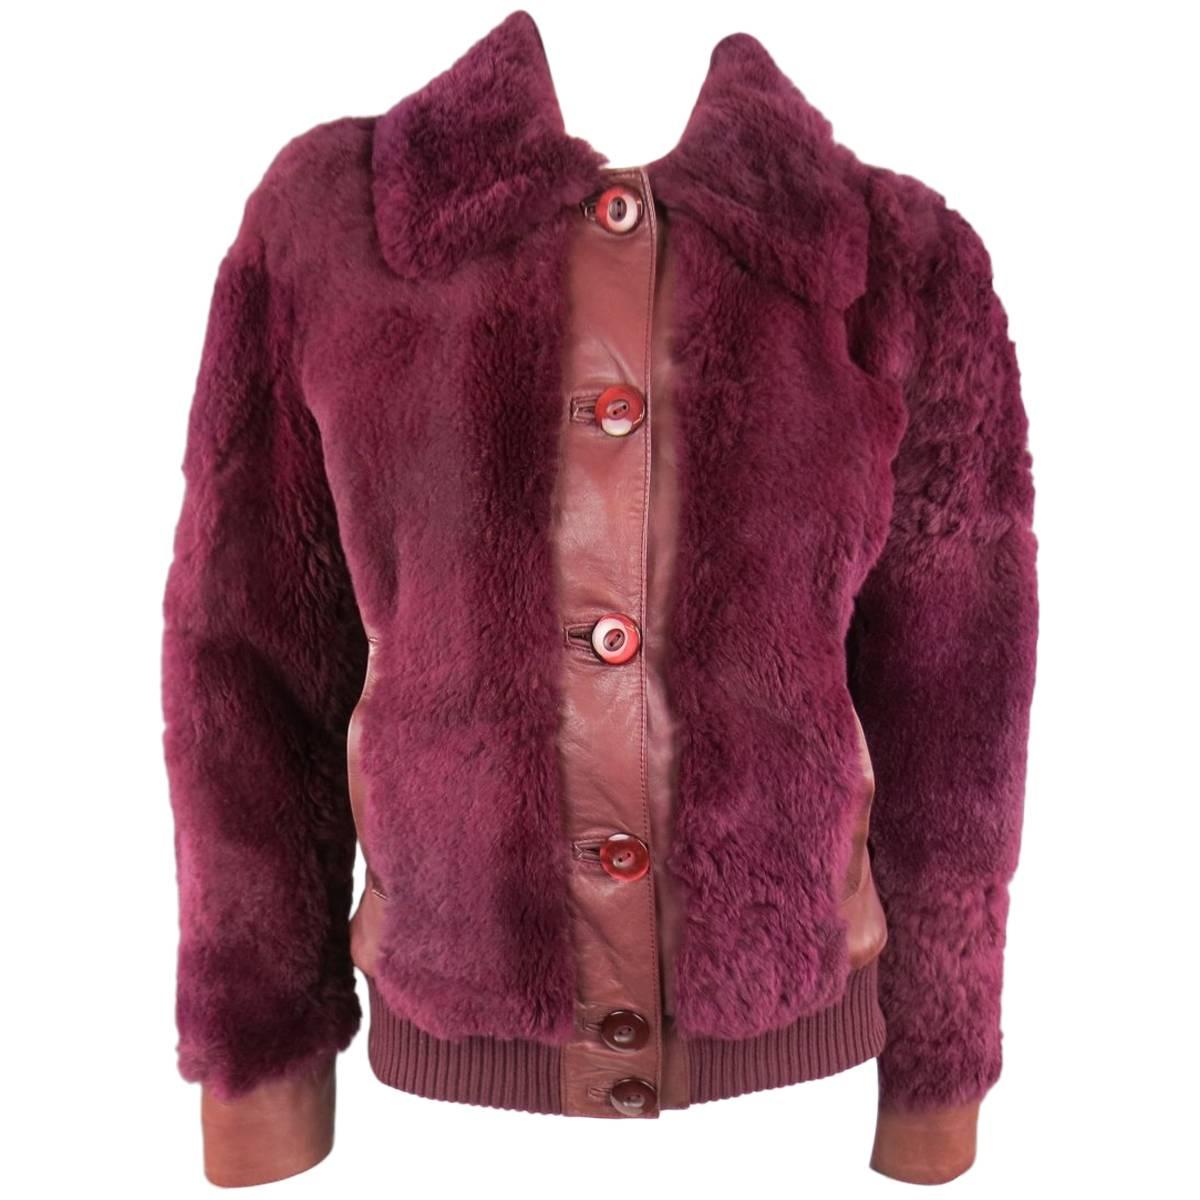 D&G by DOLCE & GABBANA Size 6 Magenta Purple Leather & Rabbit Fur Bomber Jacket